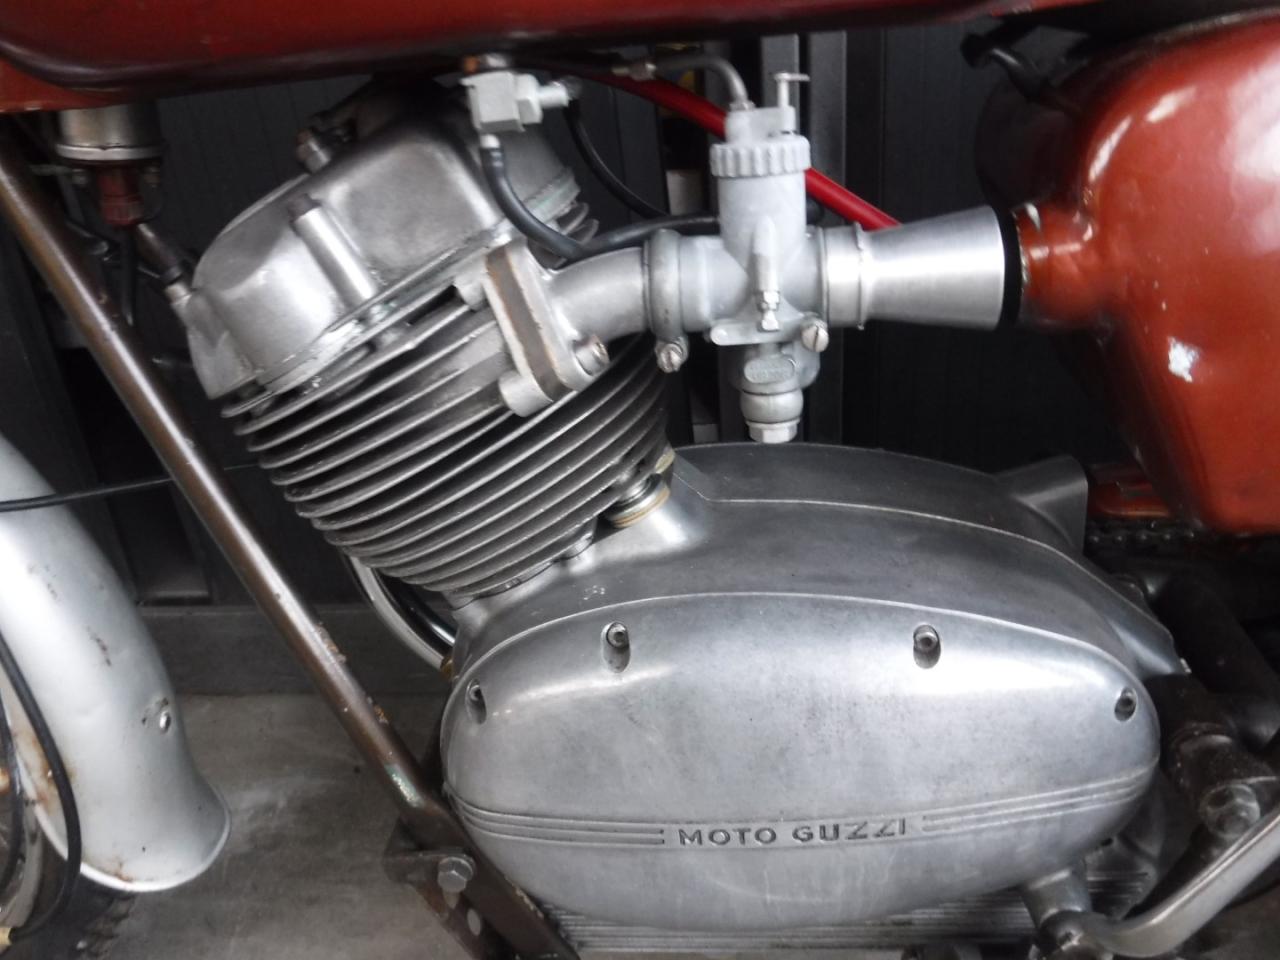 1968 Moto Guzzi Stornello 125cc Sport